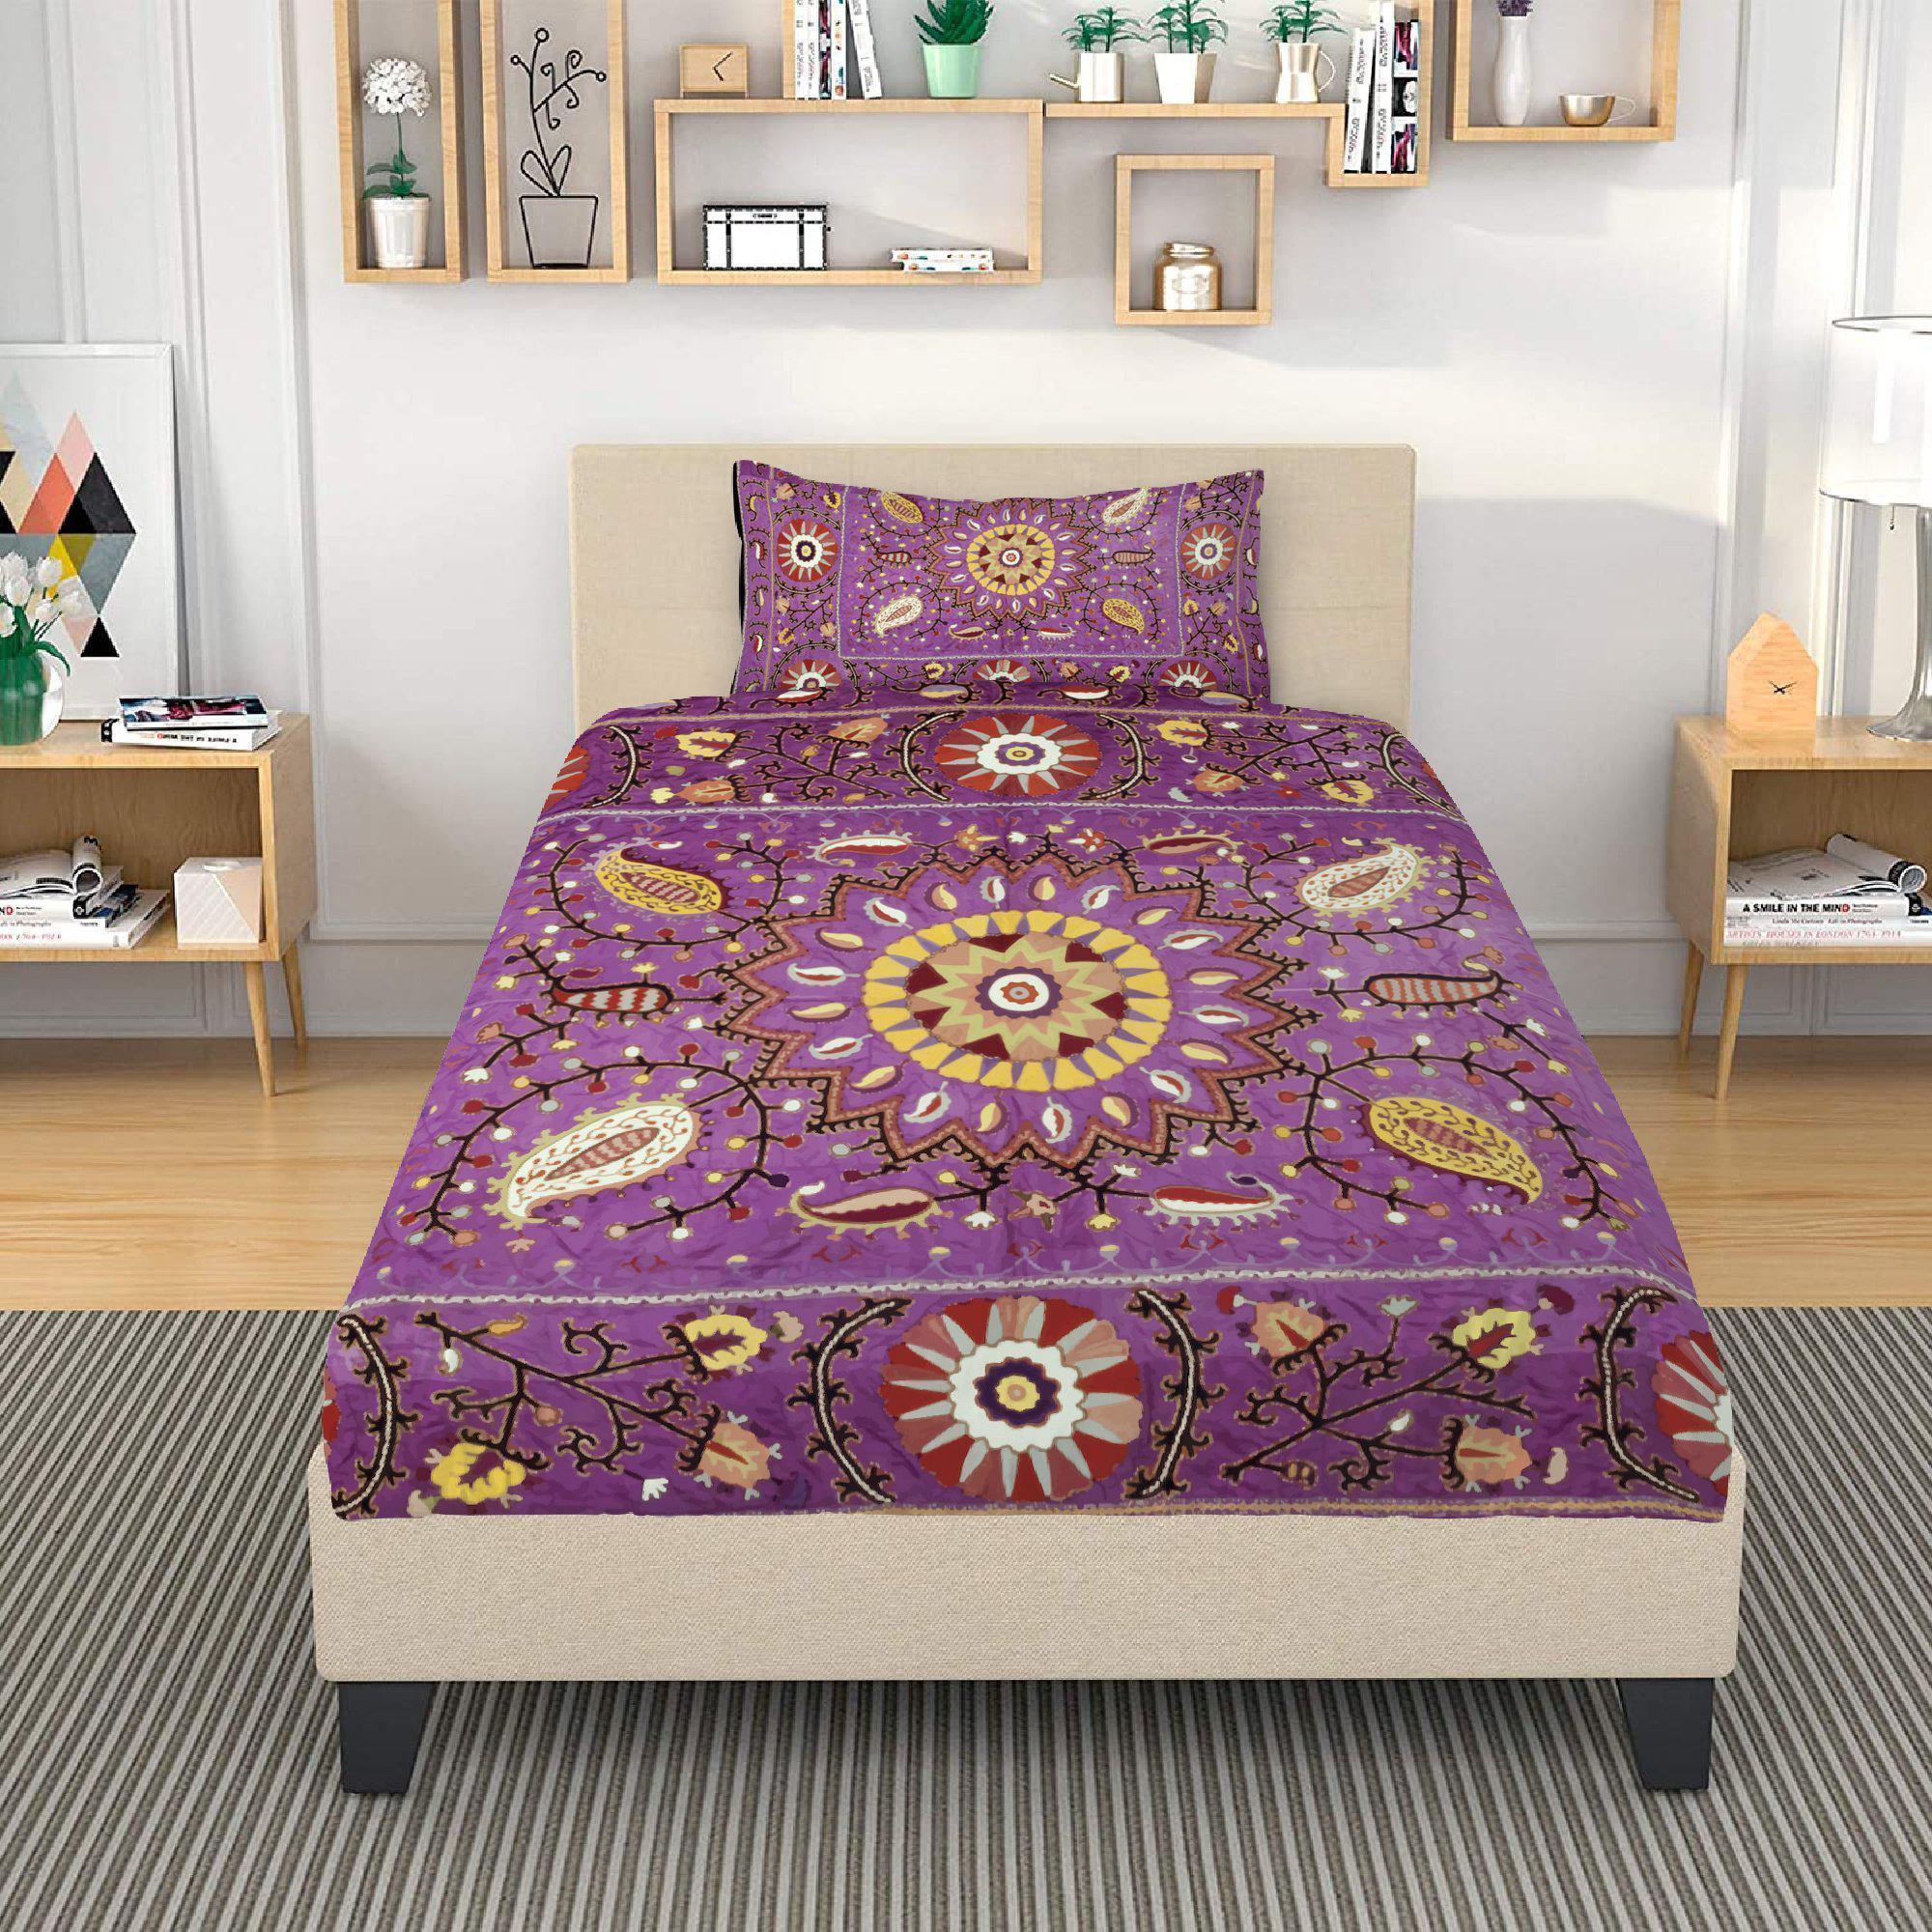 Bedding sets Bedding Set, Suzani Culture Tribal Design